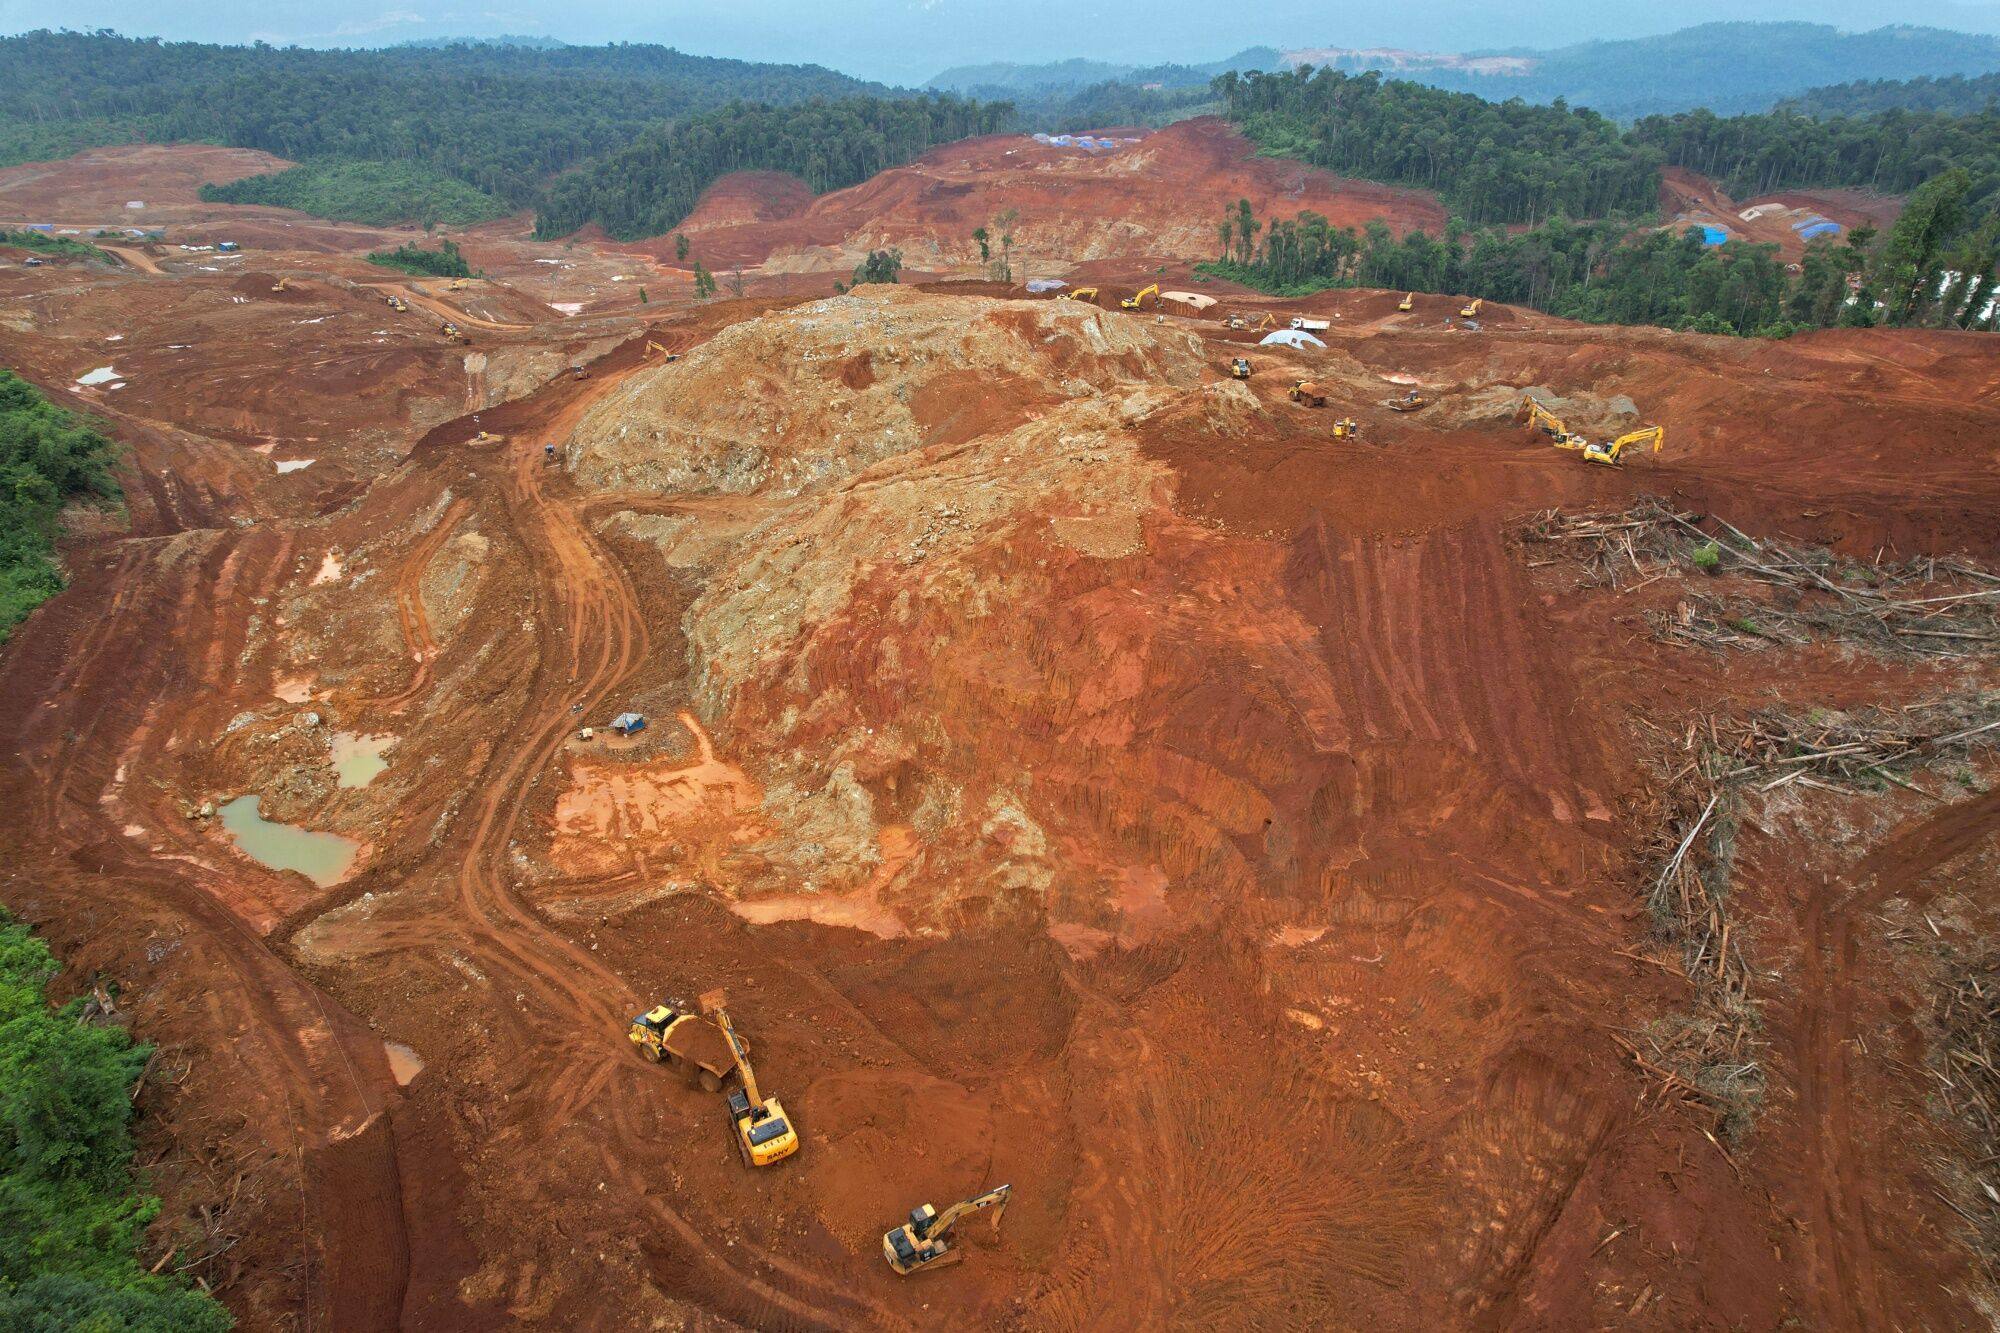 A nickel mine in Morowali regency, Central Sulawesi, Indonesia. Photo: Bloomberg